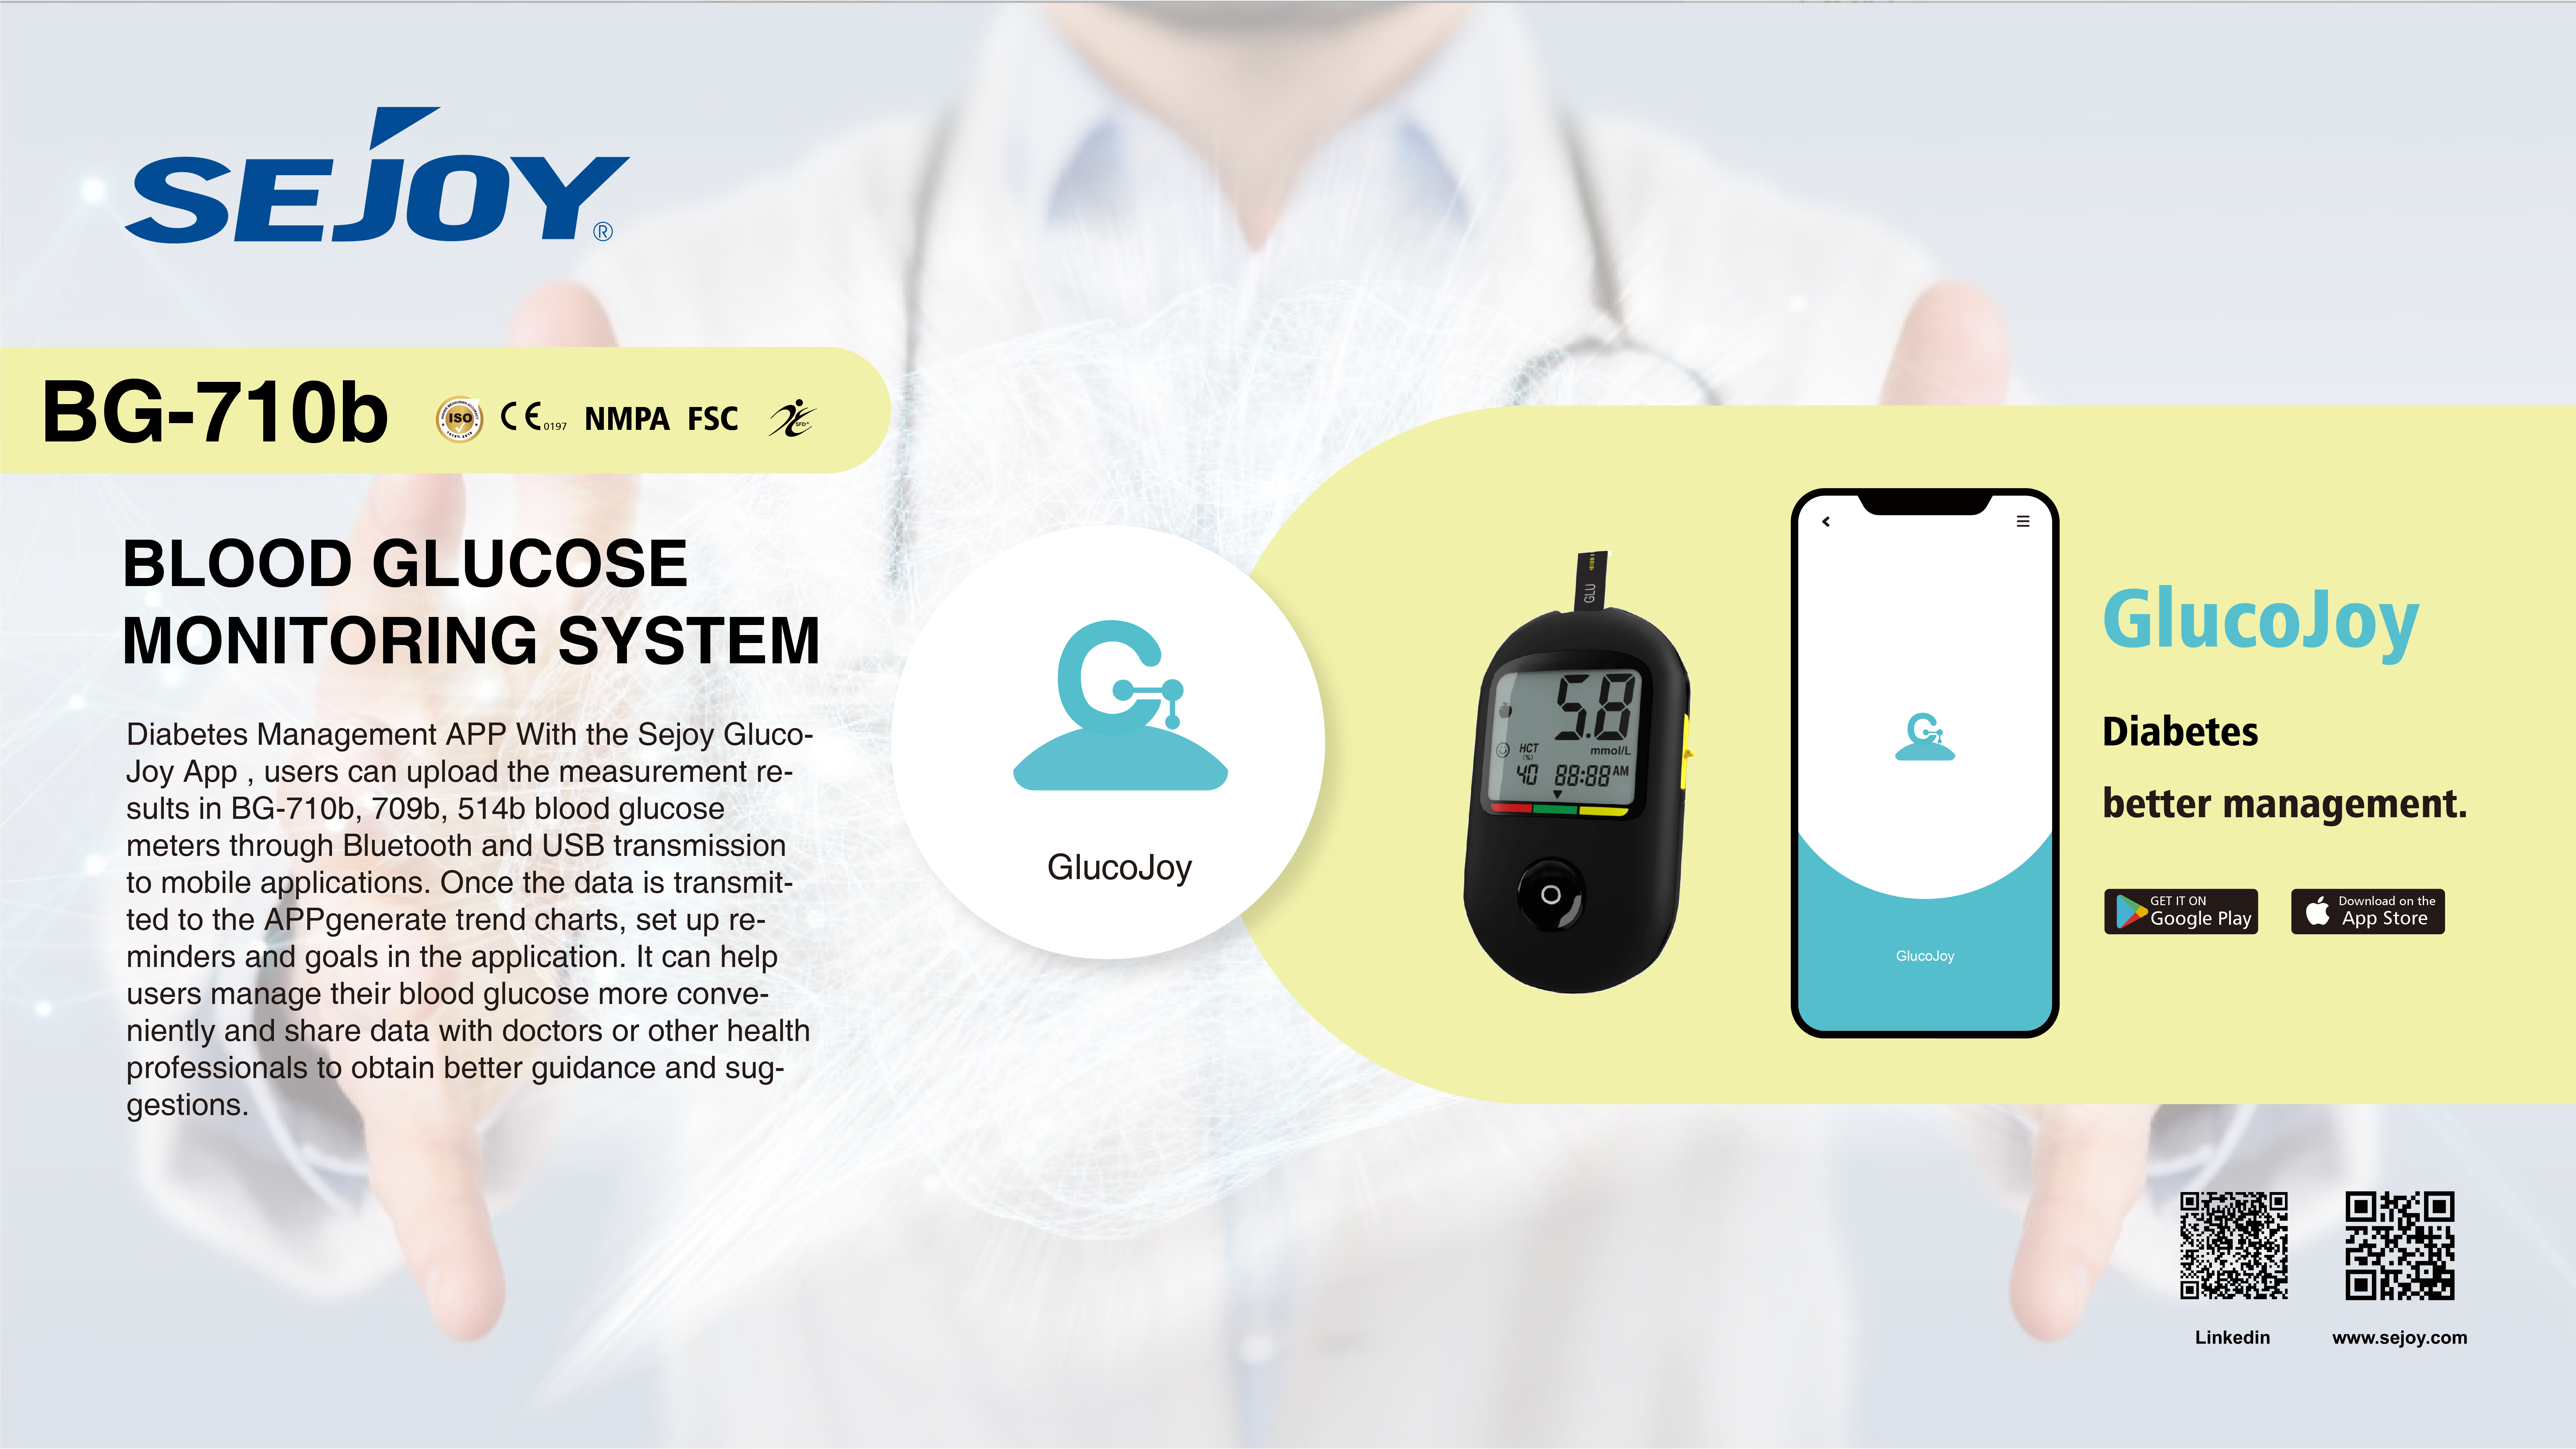 Diabetes Better Management – Sejoy BG-710b Blood Glucose Monitoring System